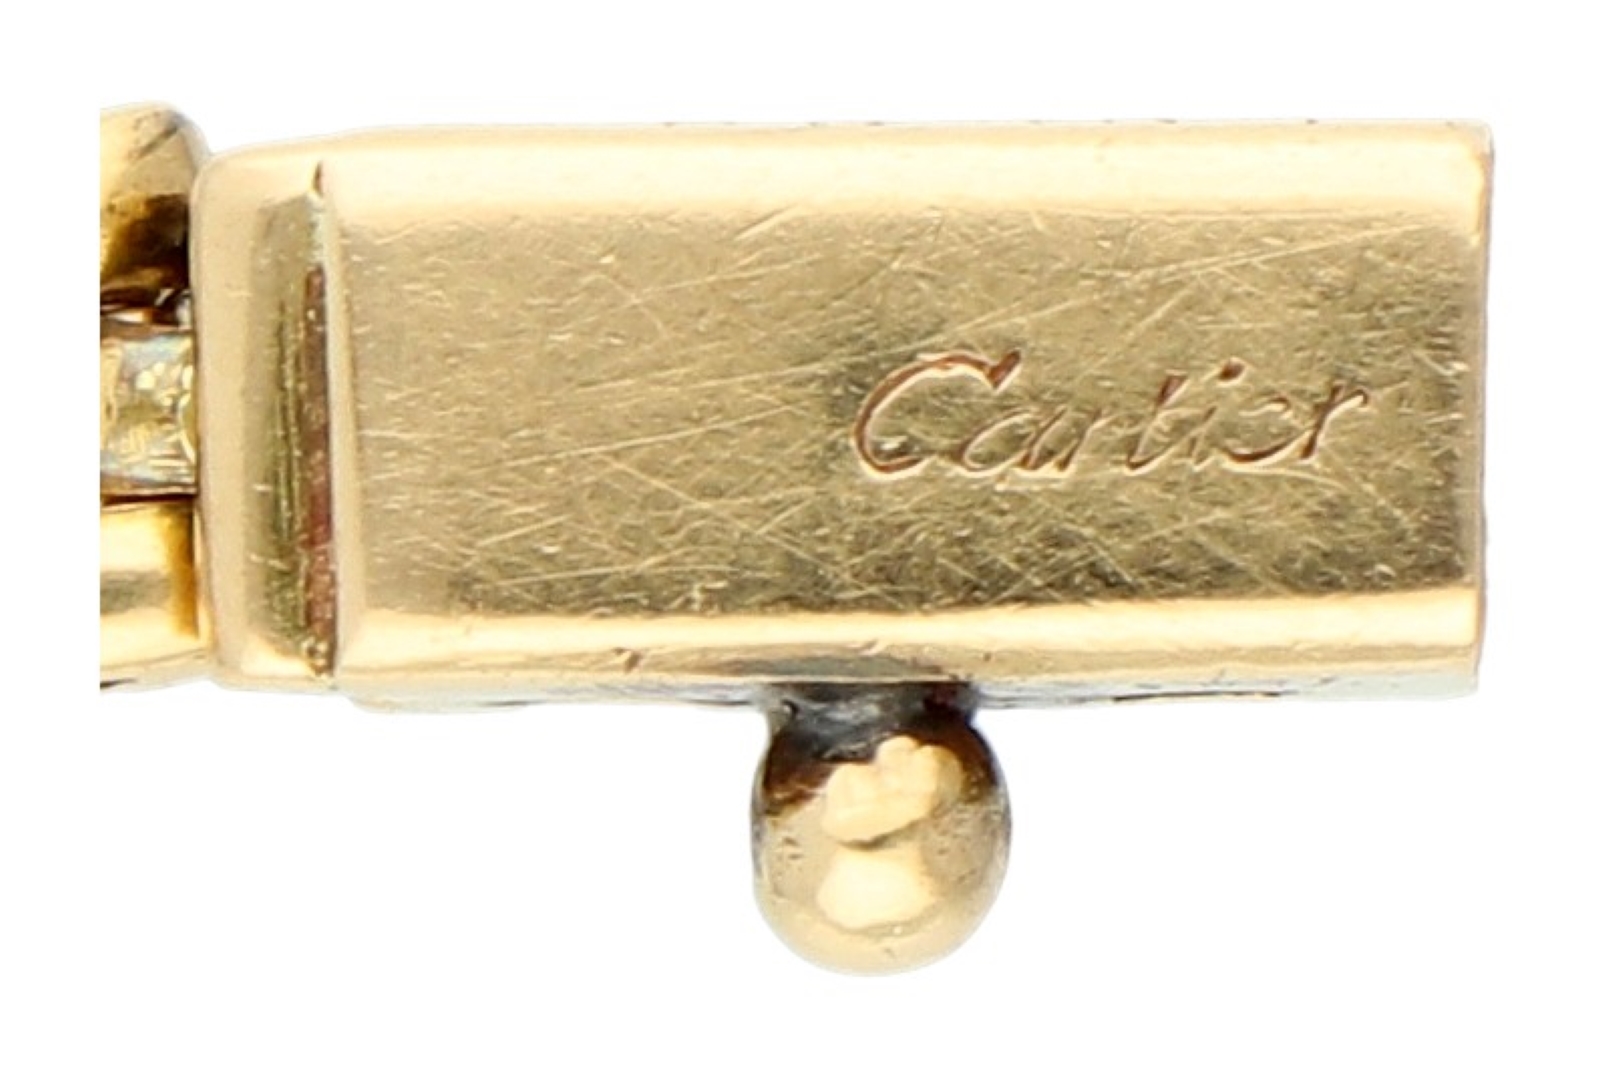 No Reserve - Cartier 18K yellow gold Panthére link bracelet. - Image 4 of 4